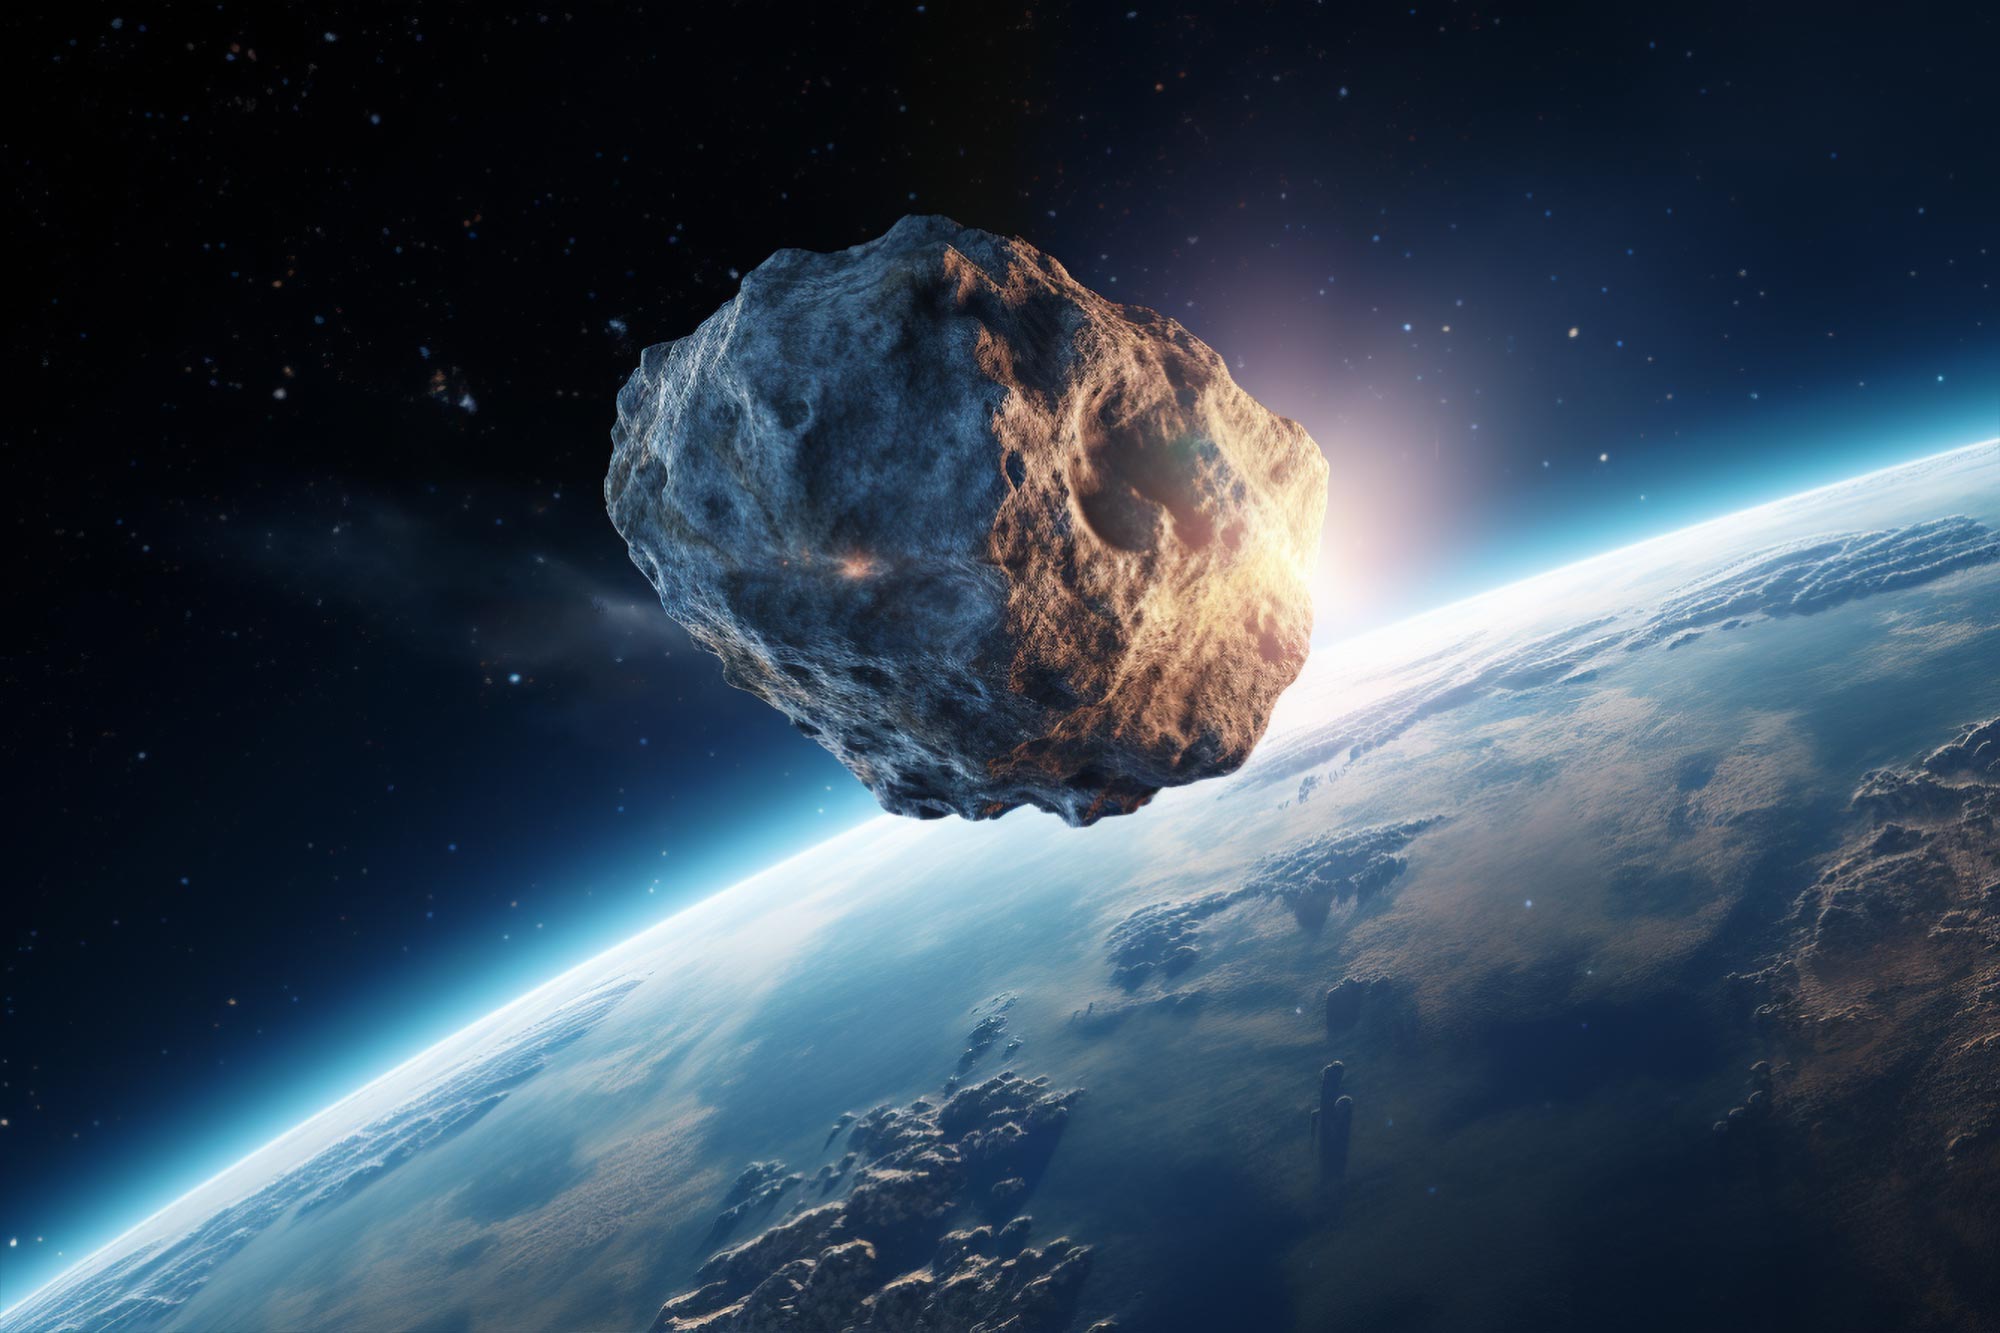 HeliLinc3D Algorithm Identifies First 'Potentially Hazardous' Asteroid